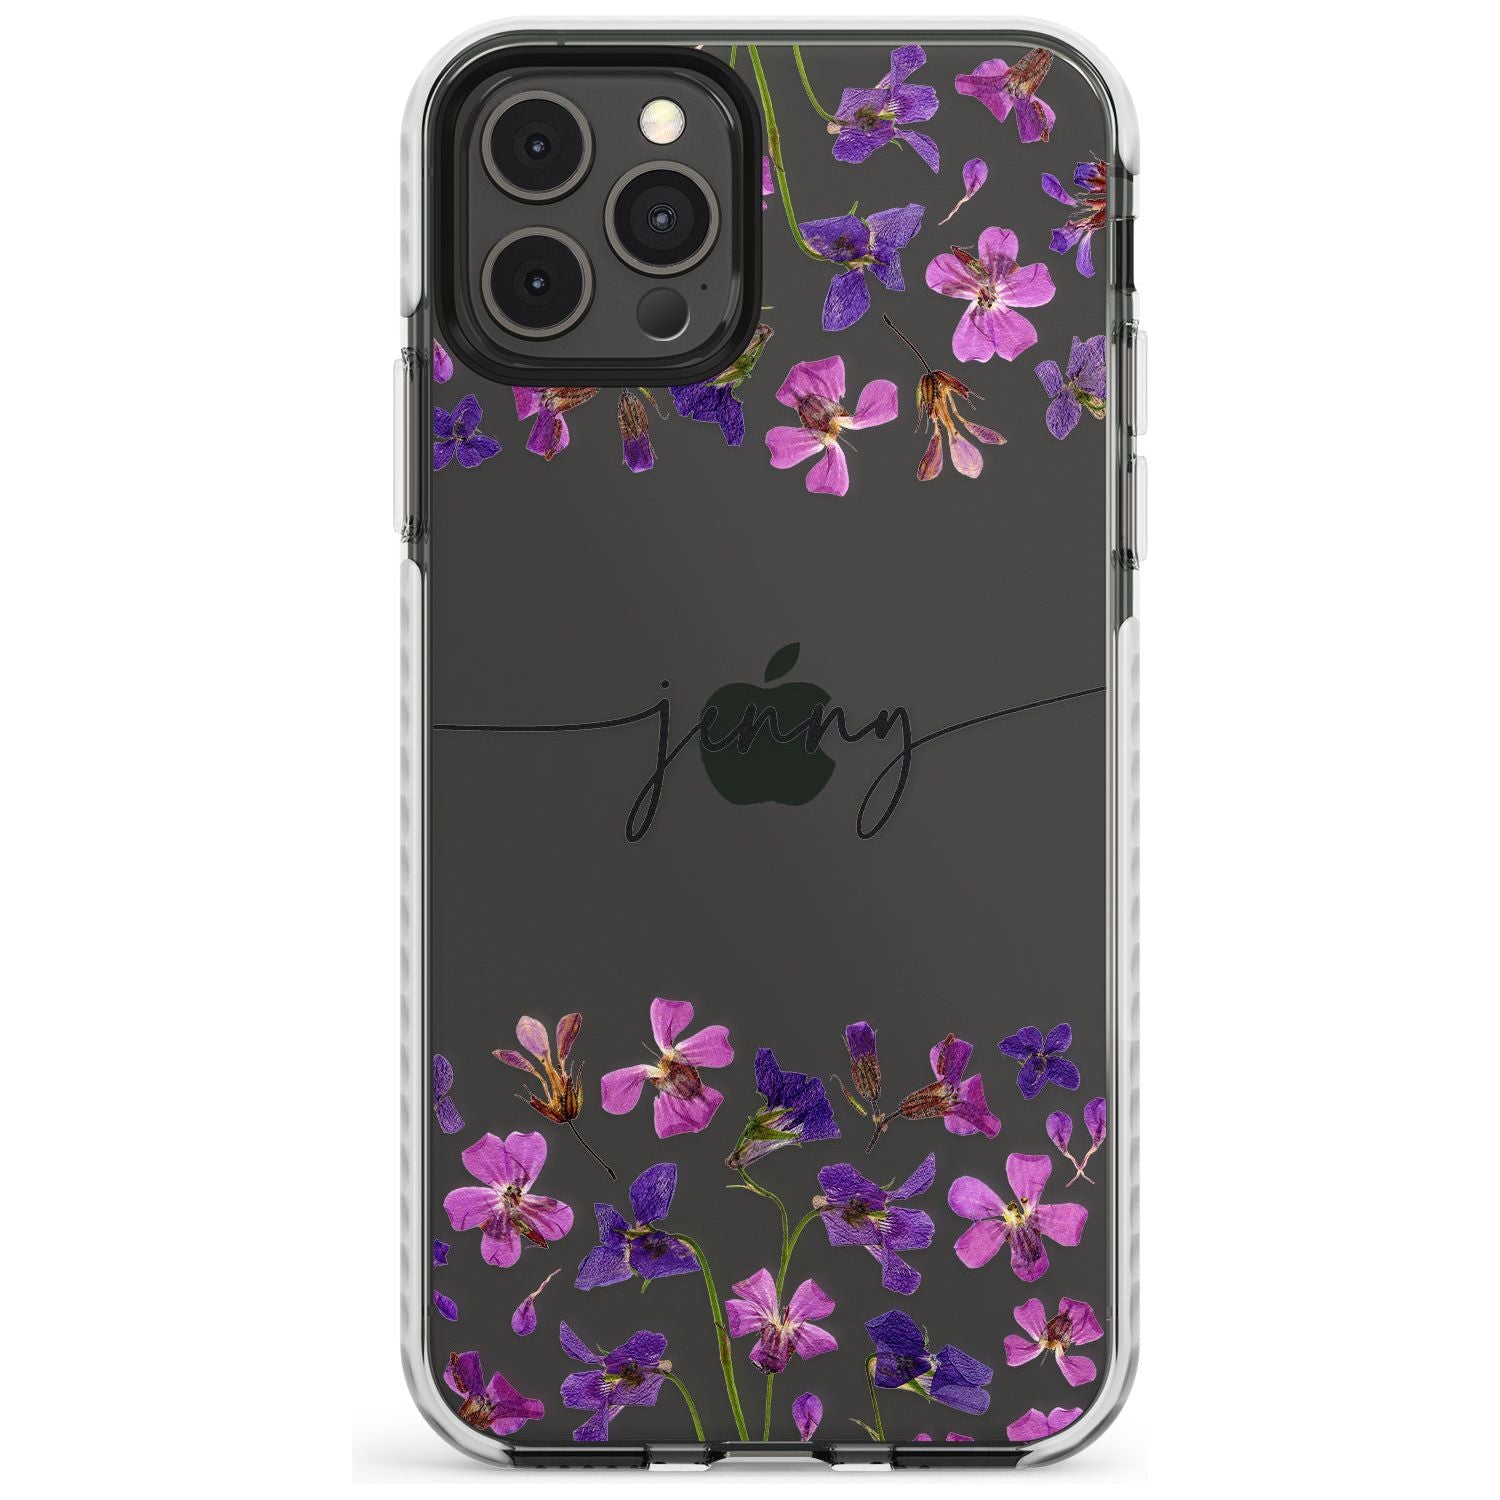 Custom Violet Flowers Slim TPU Phone Case for iPhone 11 Pro Max